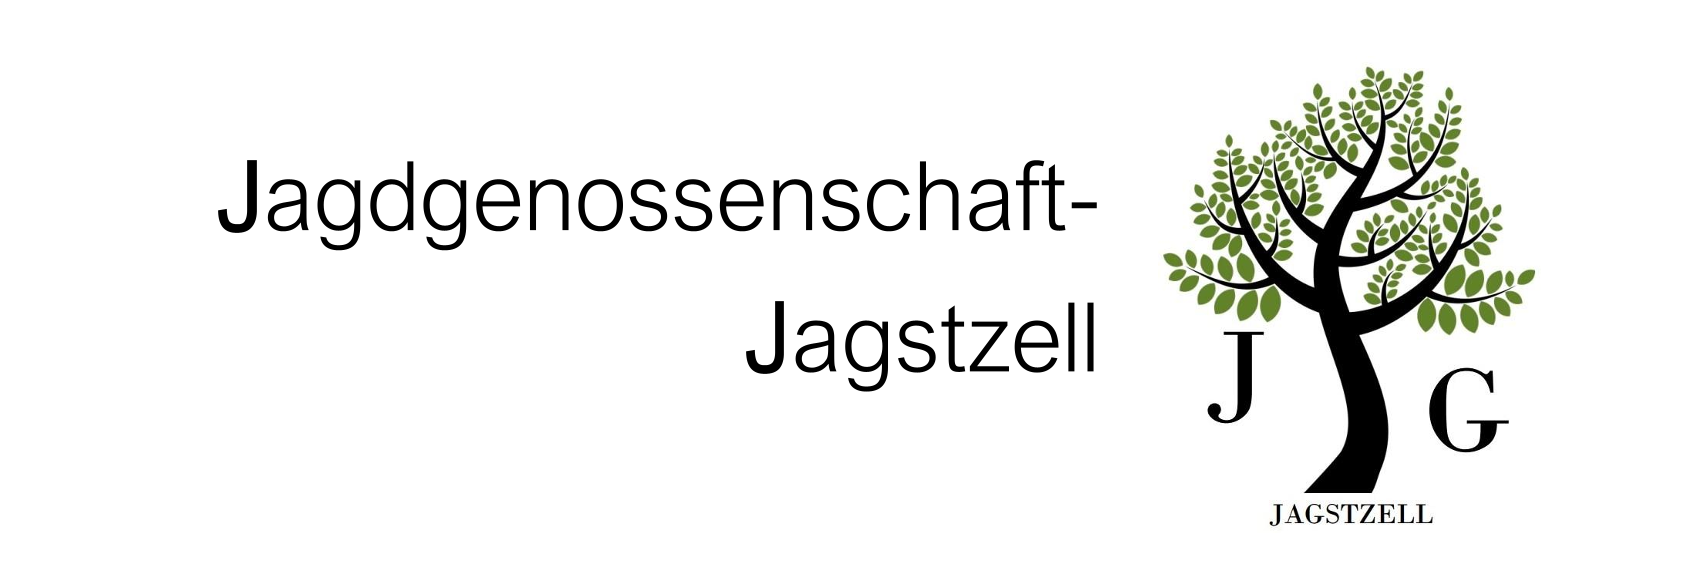 Jagdgenossenschaft-Jagstzell Logo